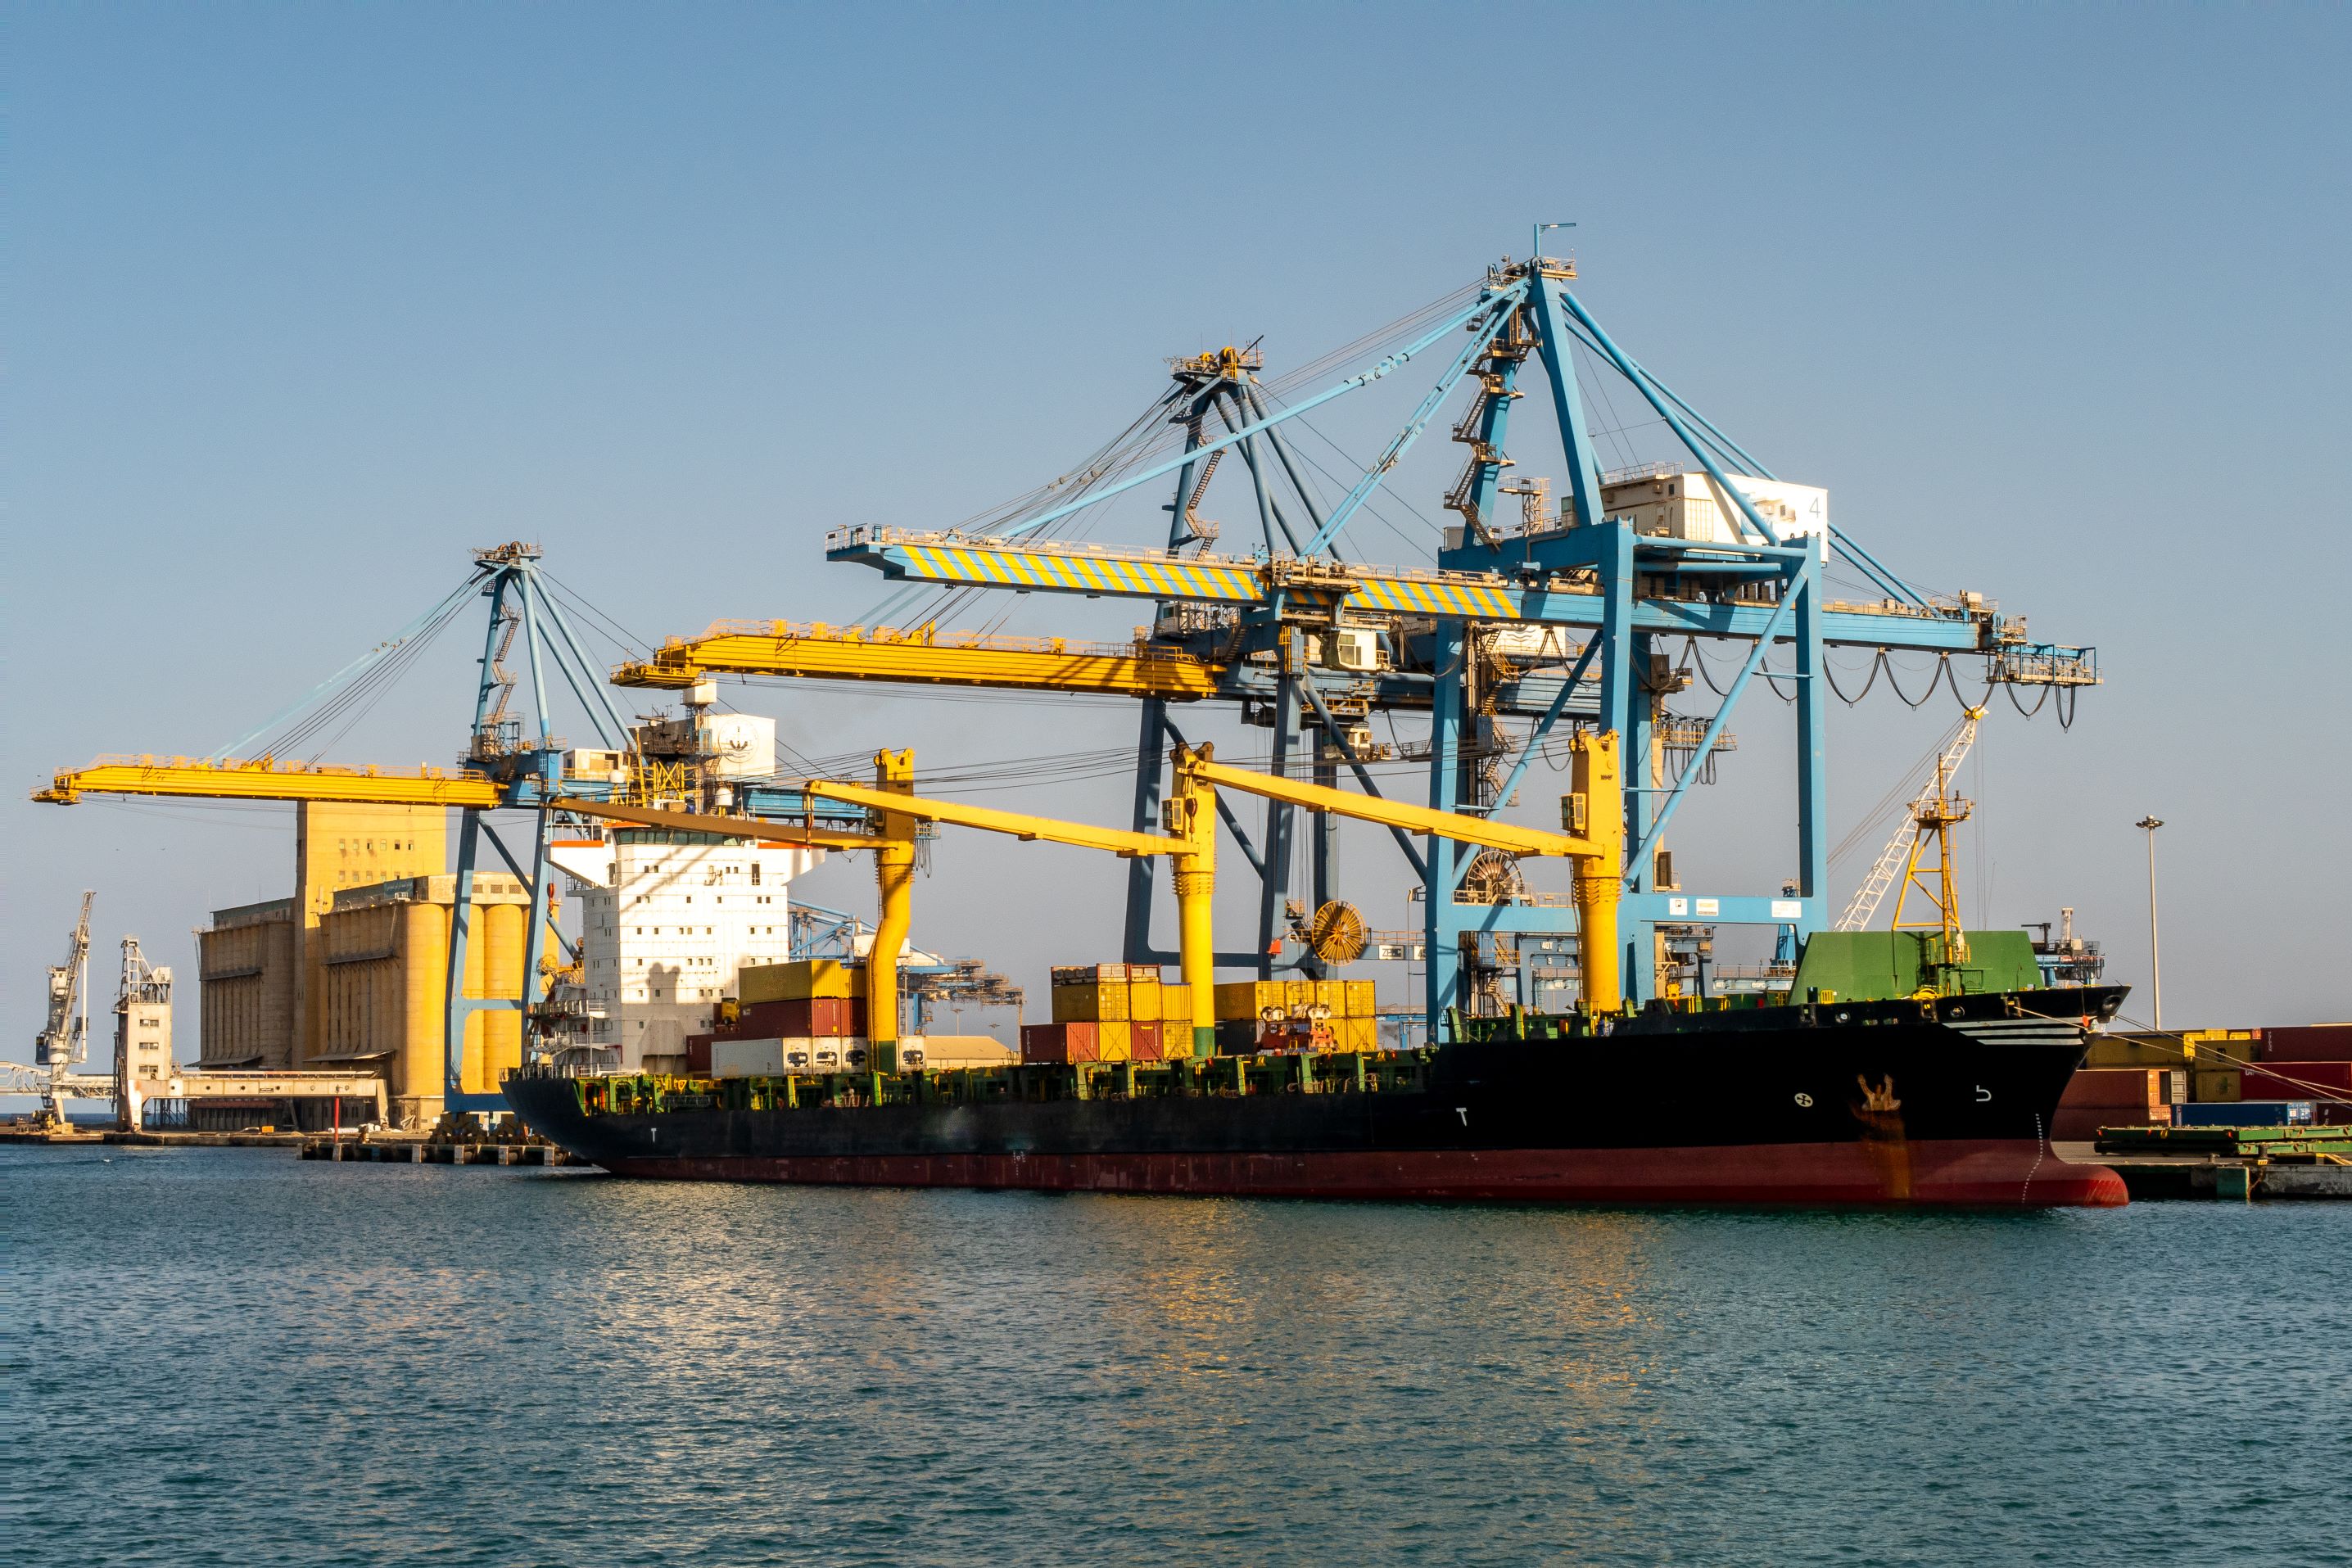 Freight ship being loaded in docks at Port Sudan, Khartoum